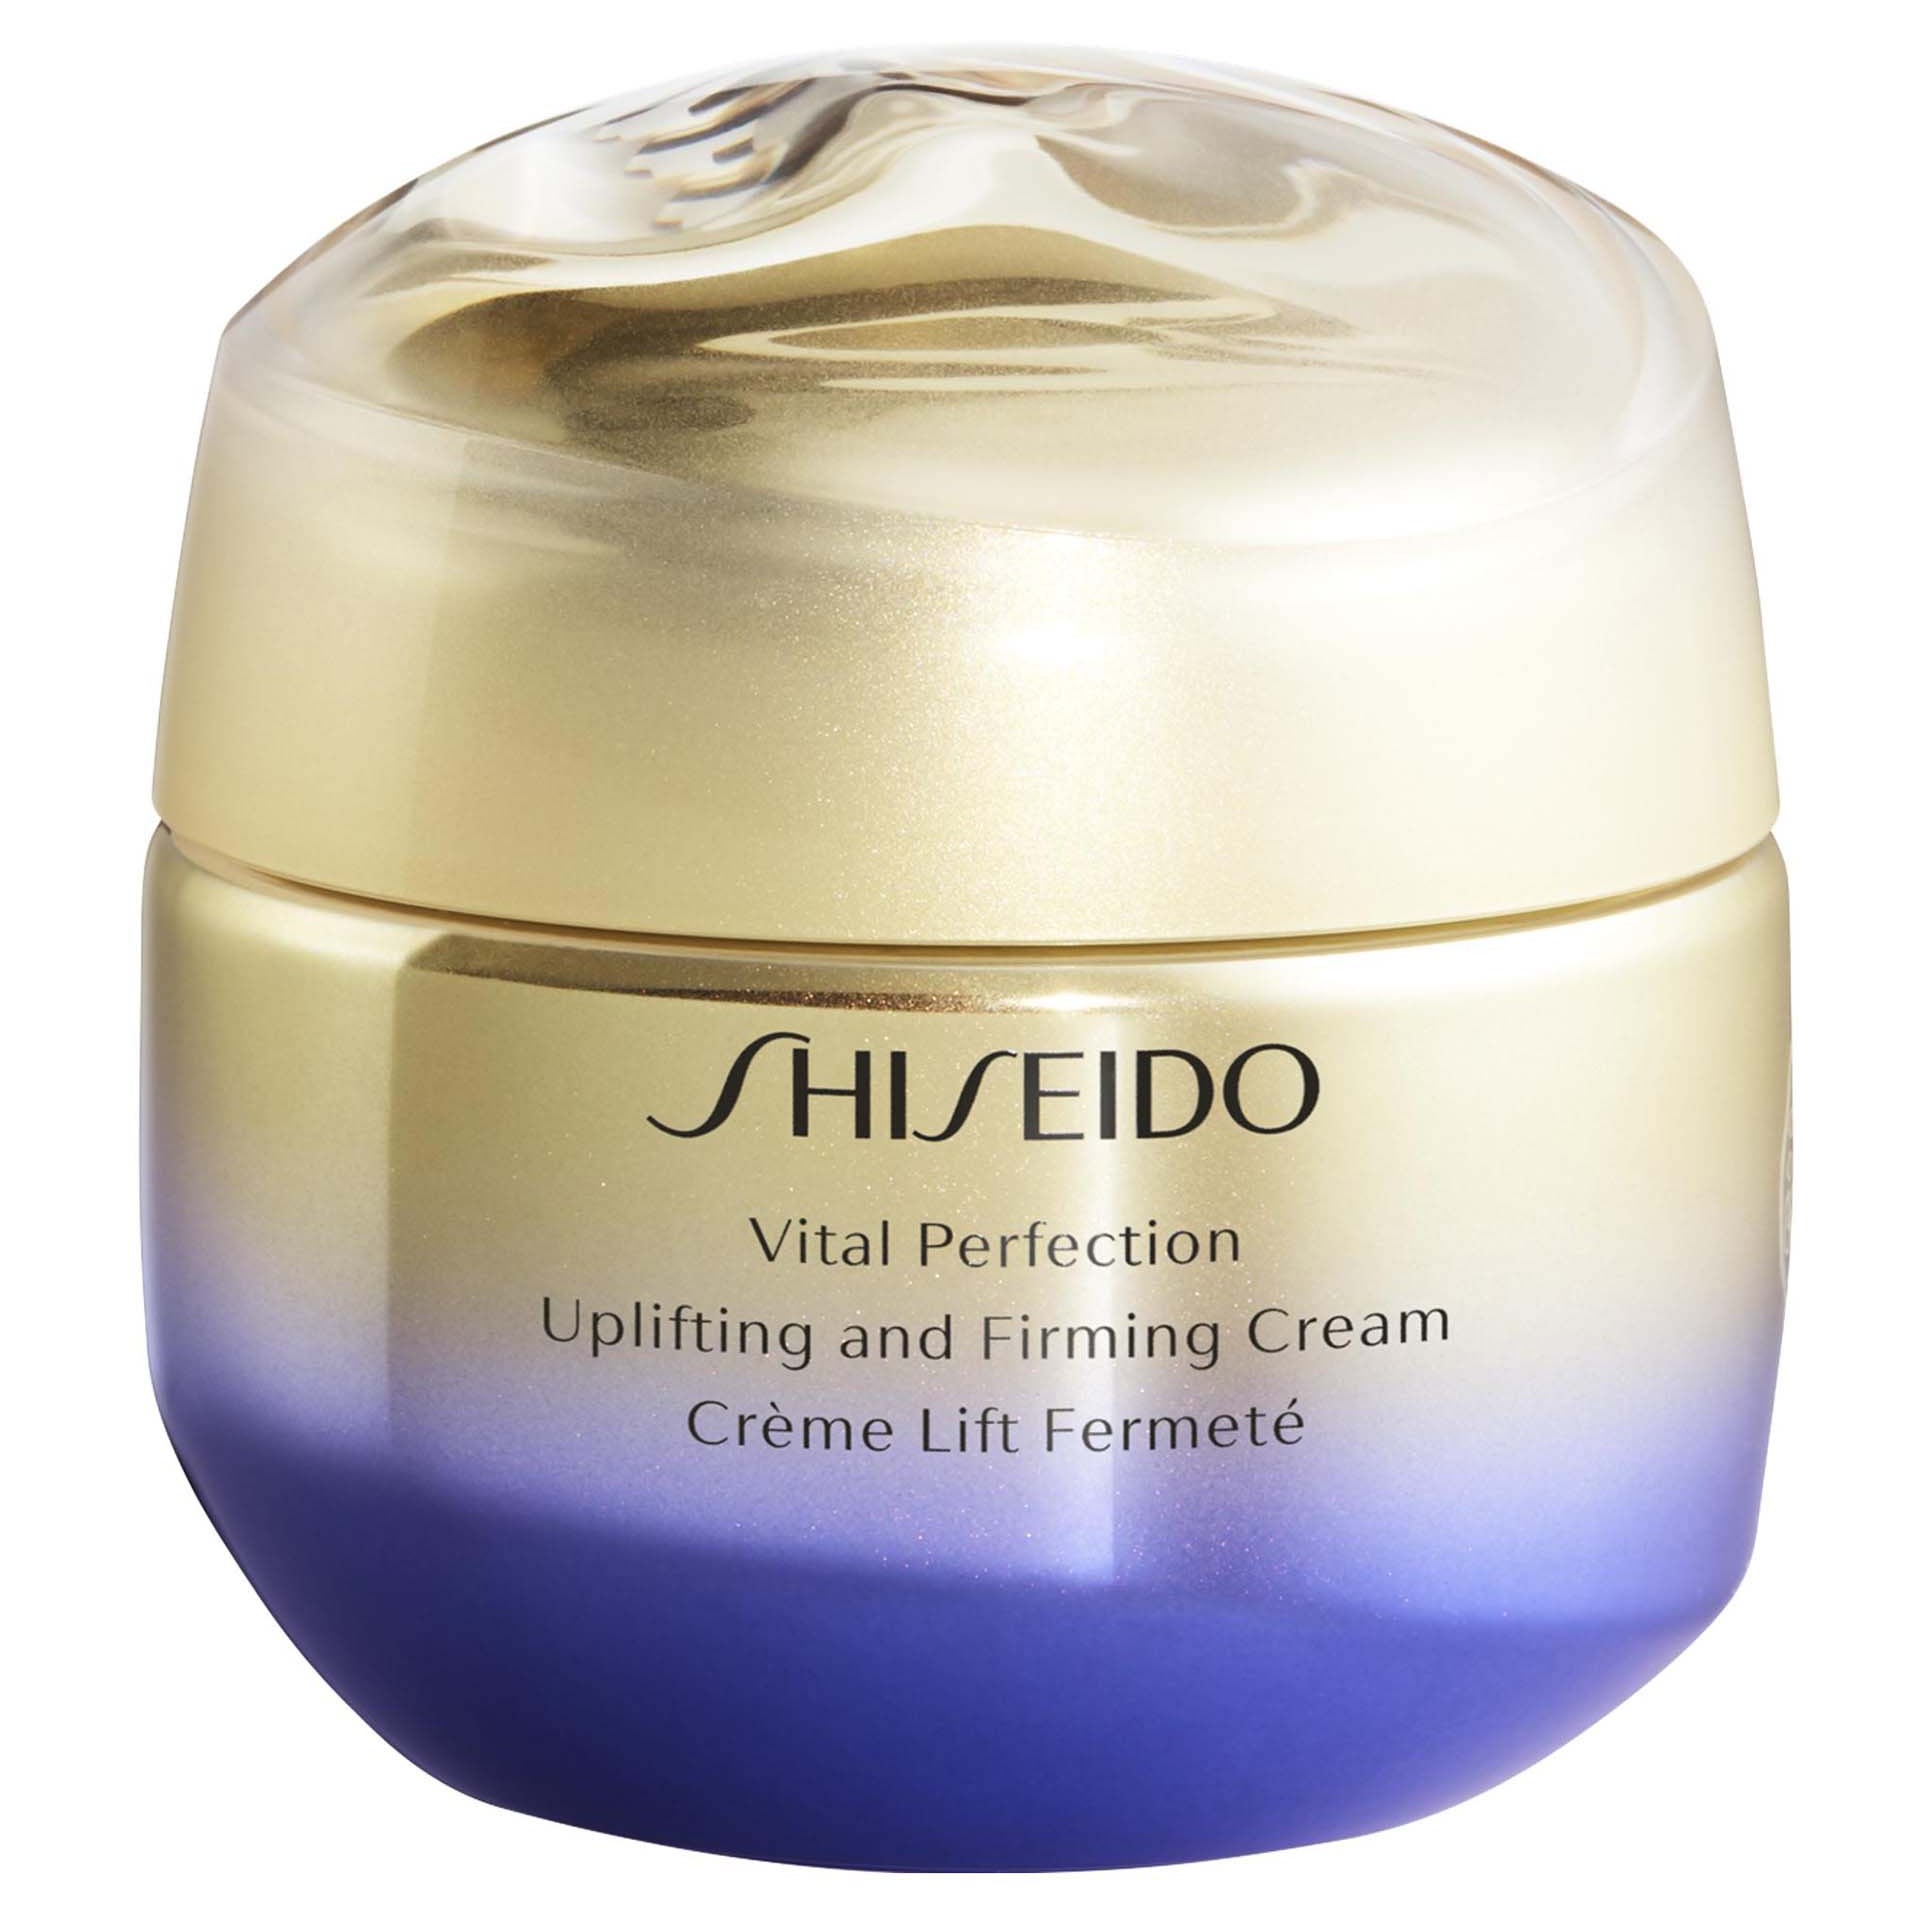 Läs mer om Shiseido Vital Perfection Uplifting and firming cream